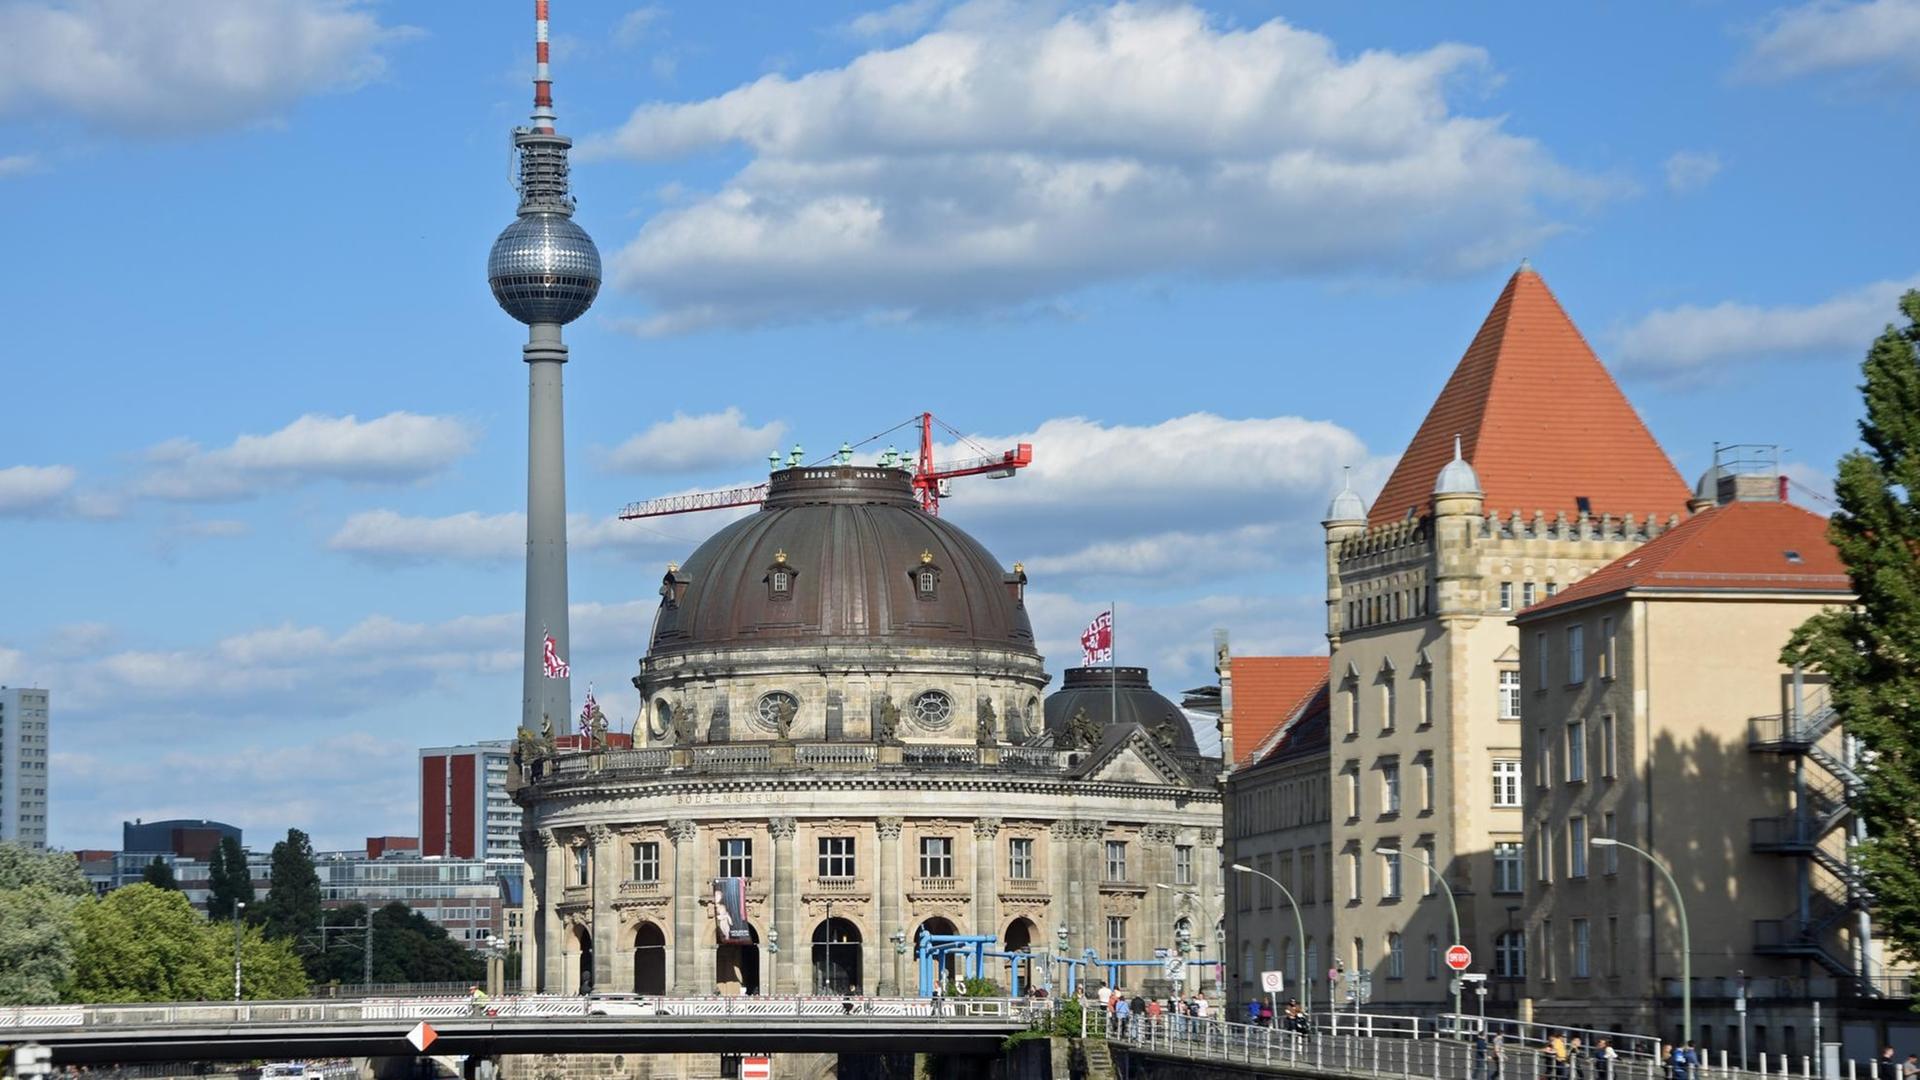 Blick die Spree in Berlin entlang in Richtung Bodemuseum und Fernsehturm.